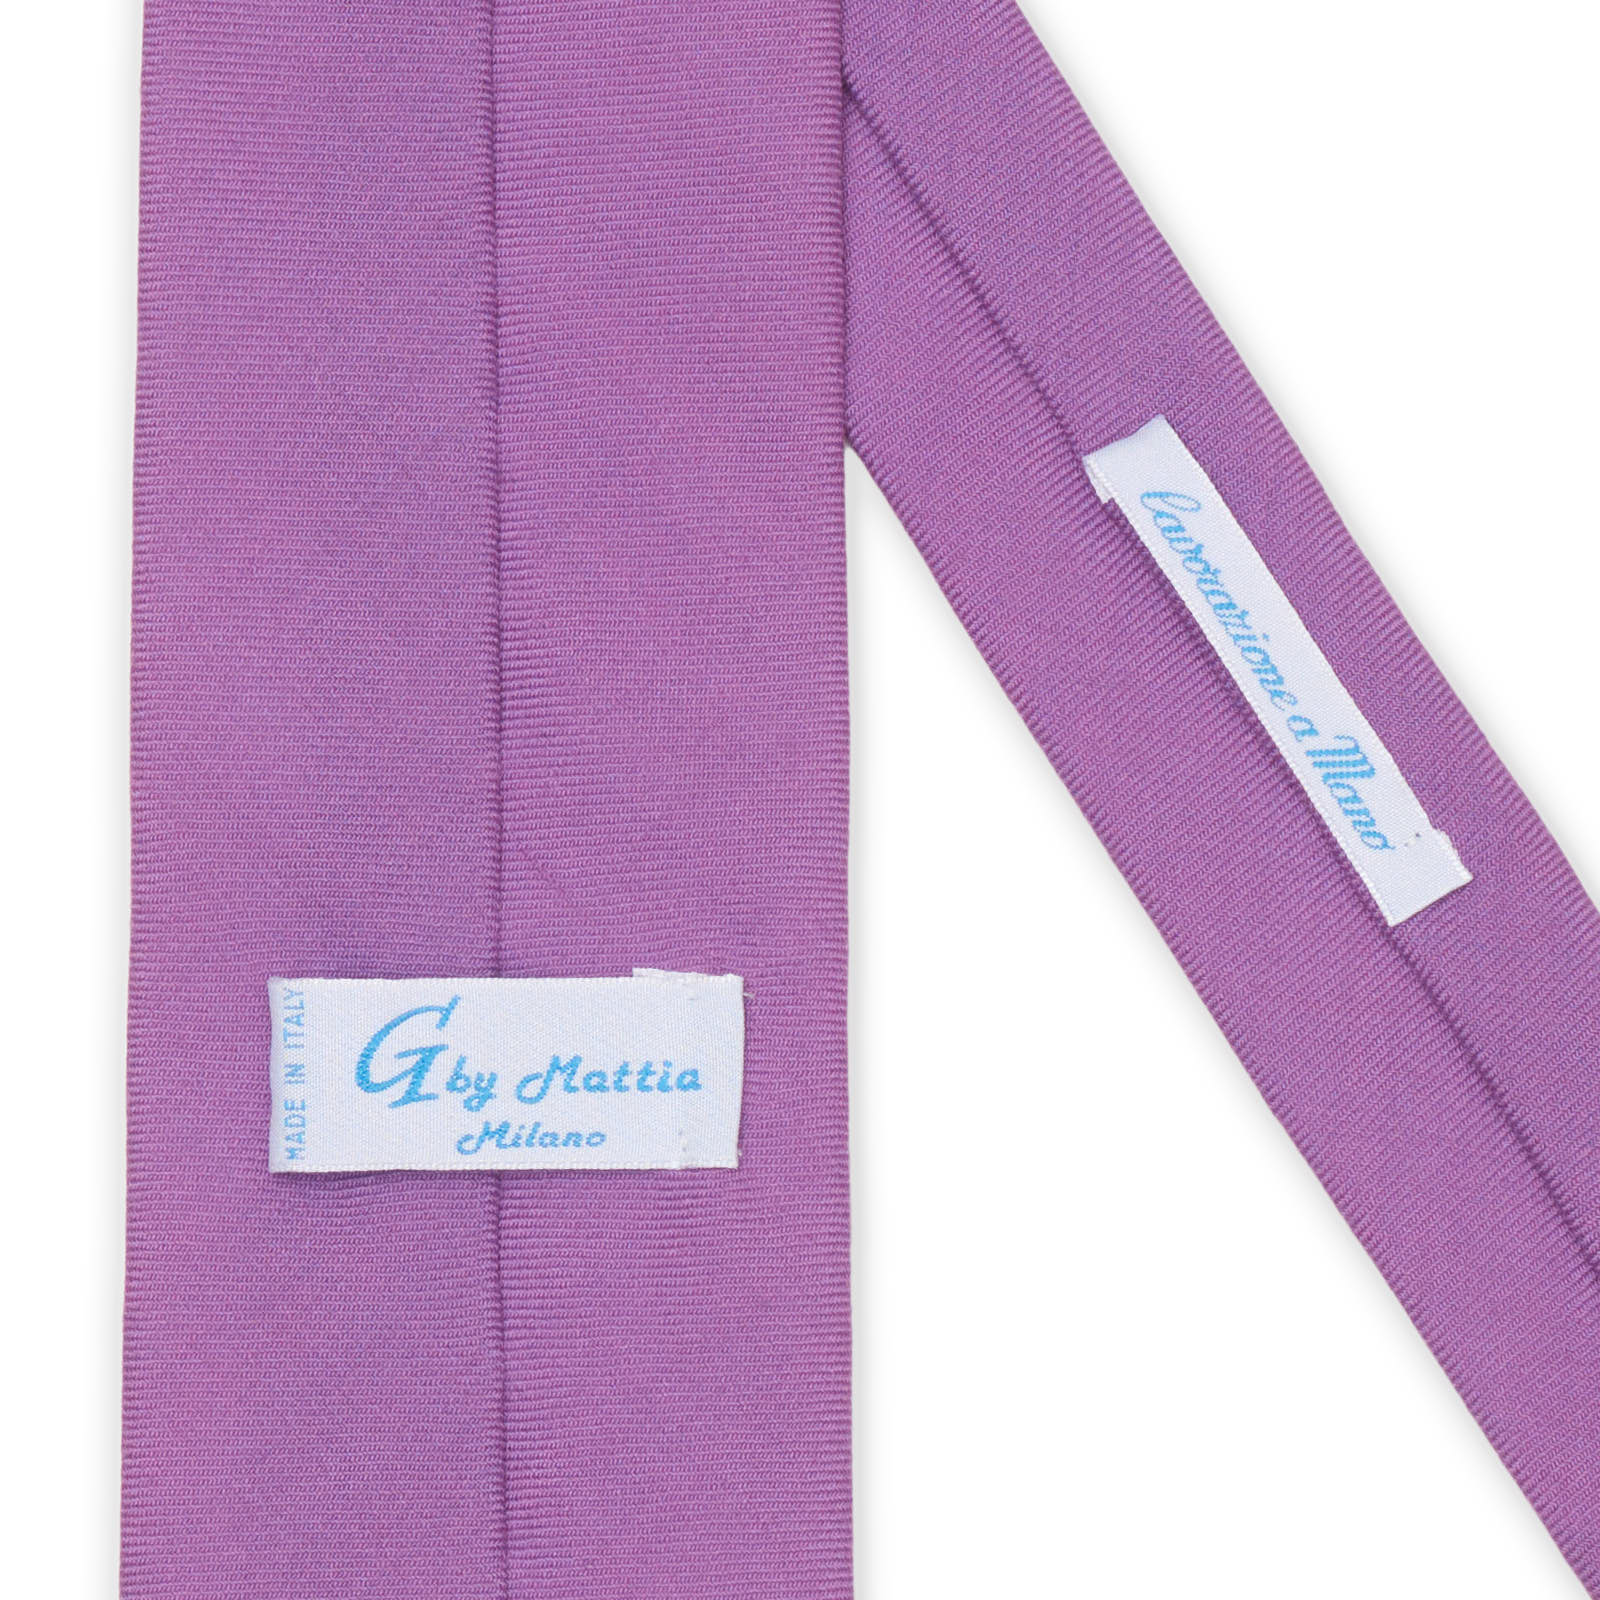 G BY MATTIA Purple Wool Tie NEW